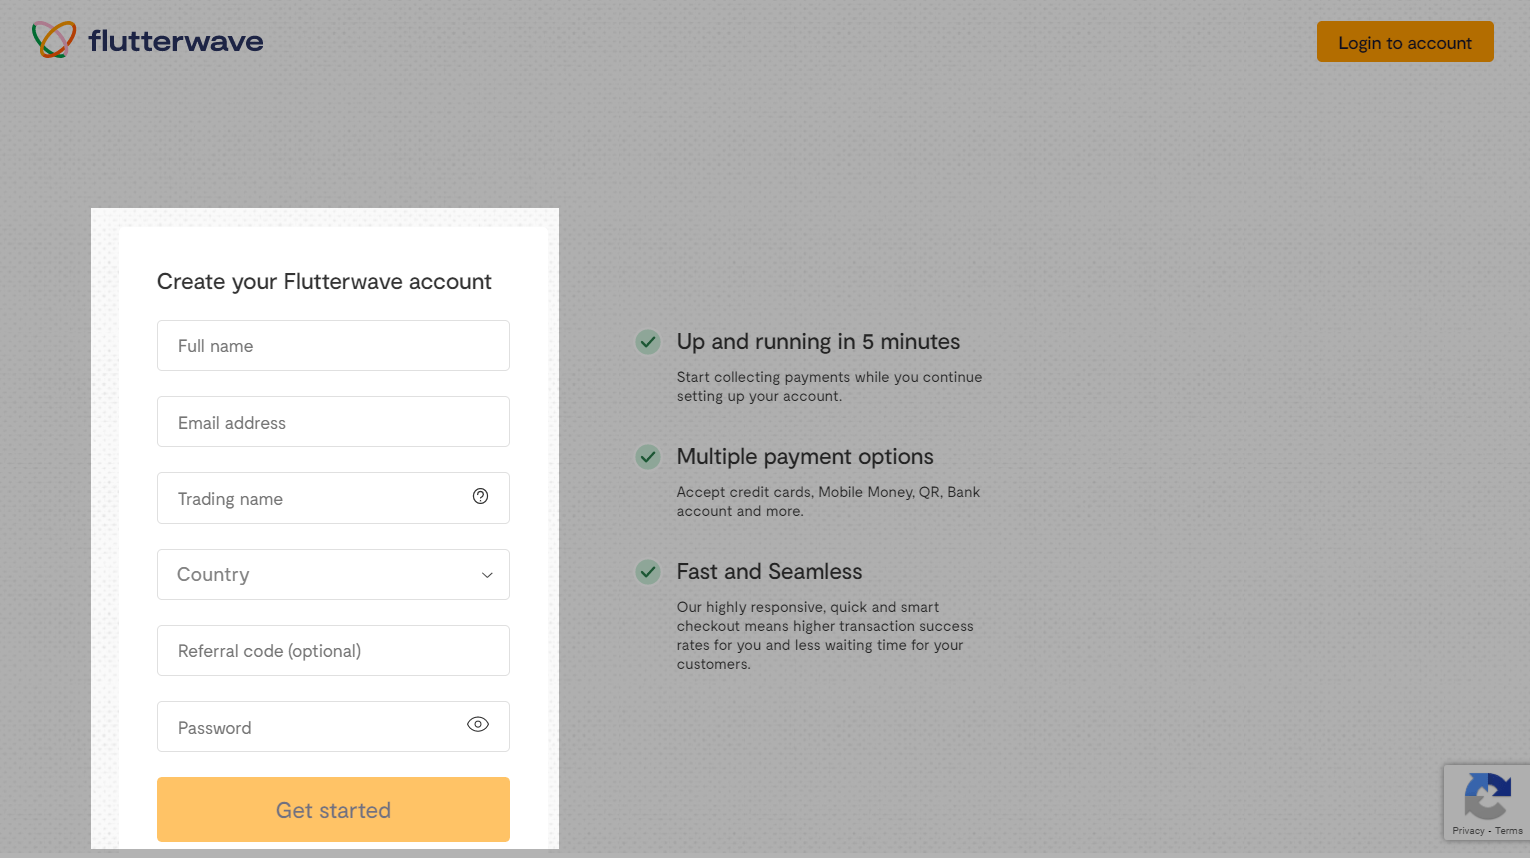 Flutterwave Client Login | Access & Manage your Account